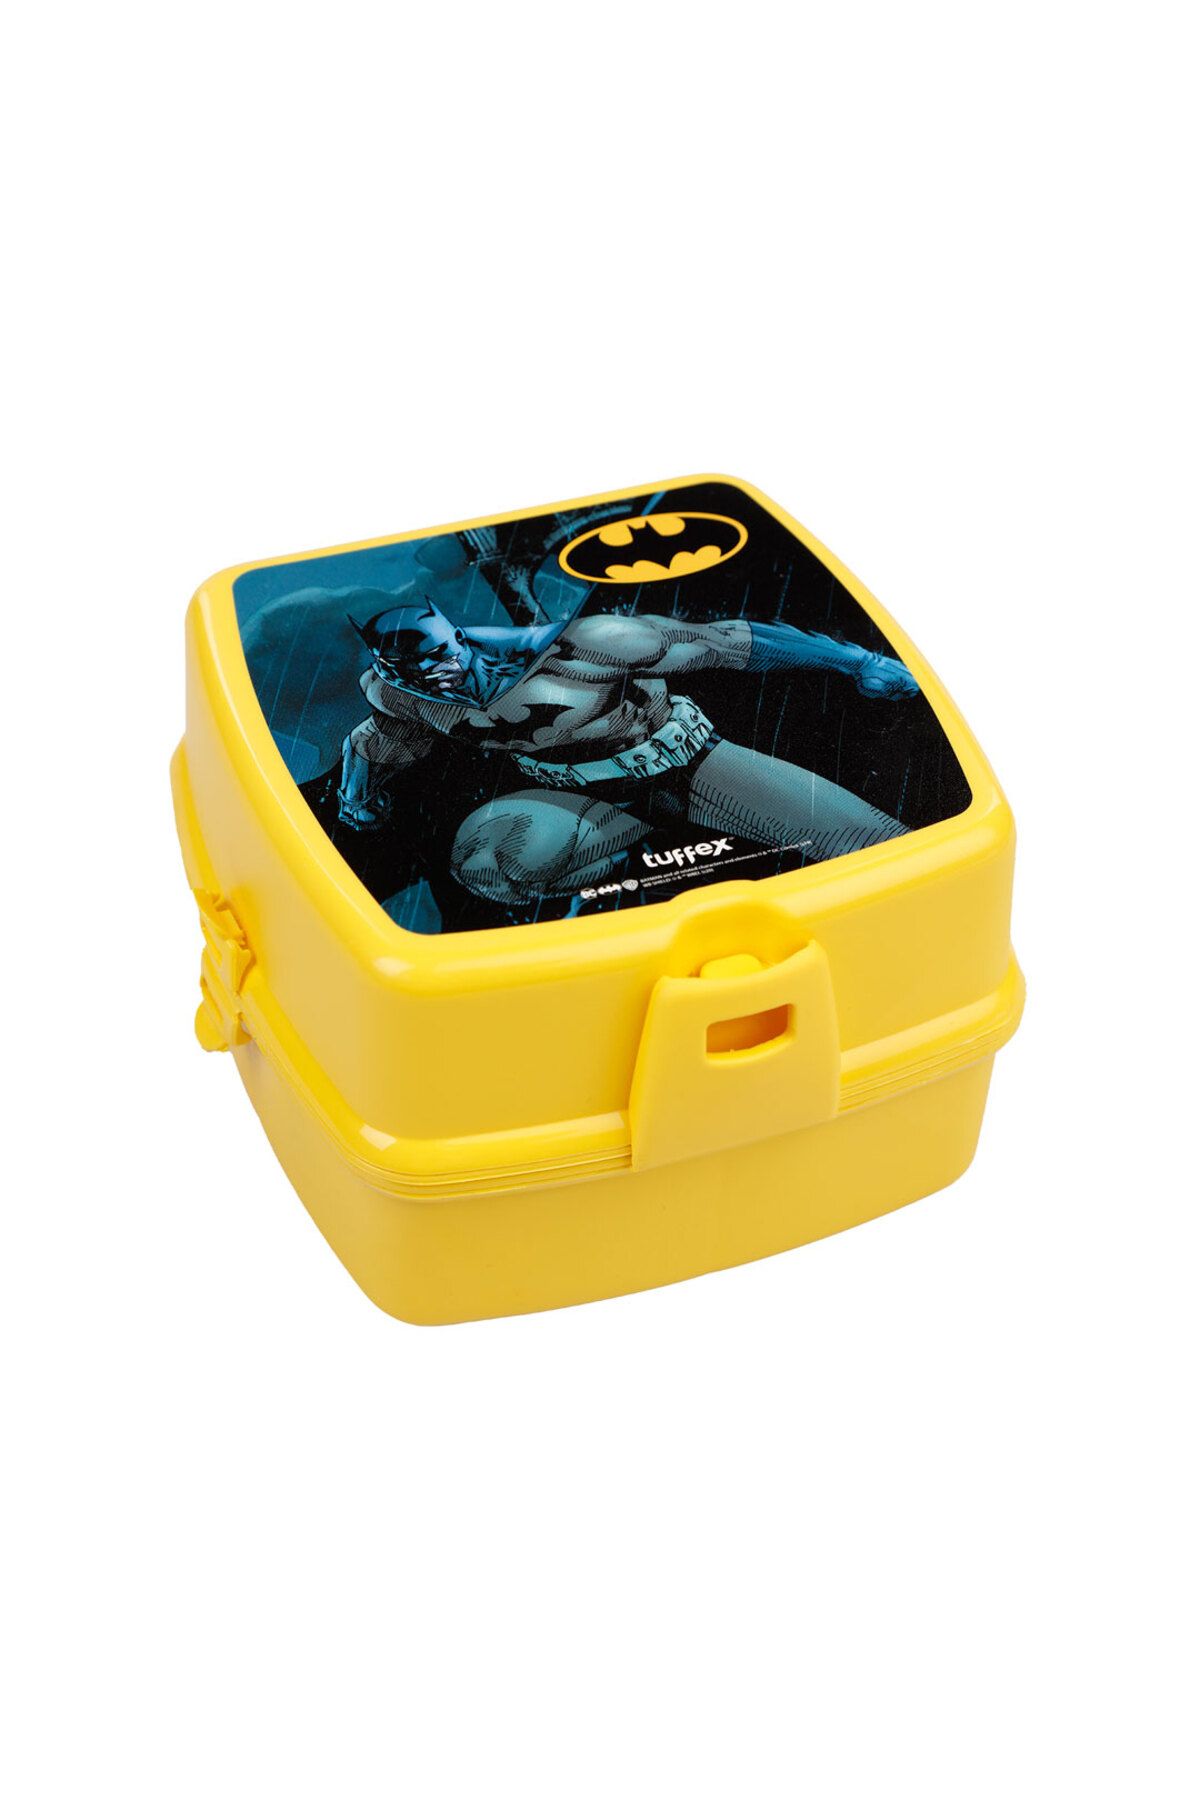 OYUNCAK STORE Batman Smart Lunch Box Saklama Kabı